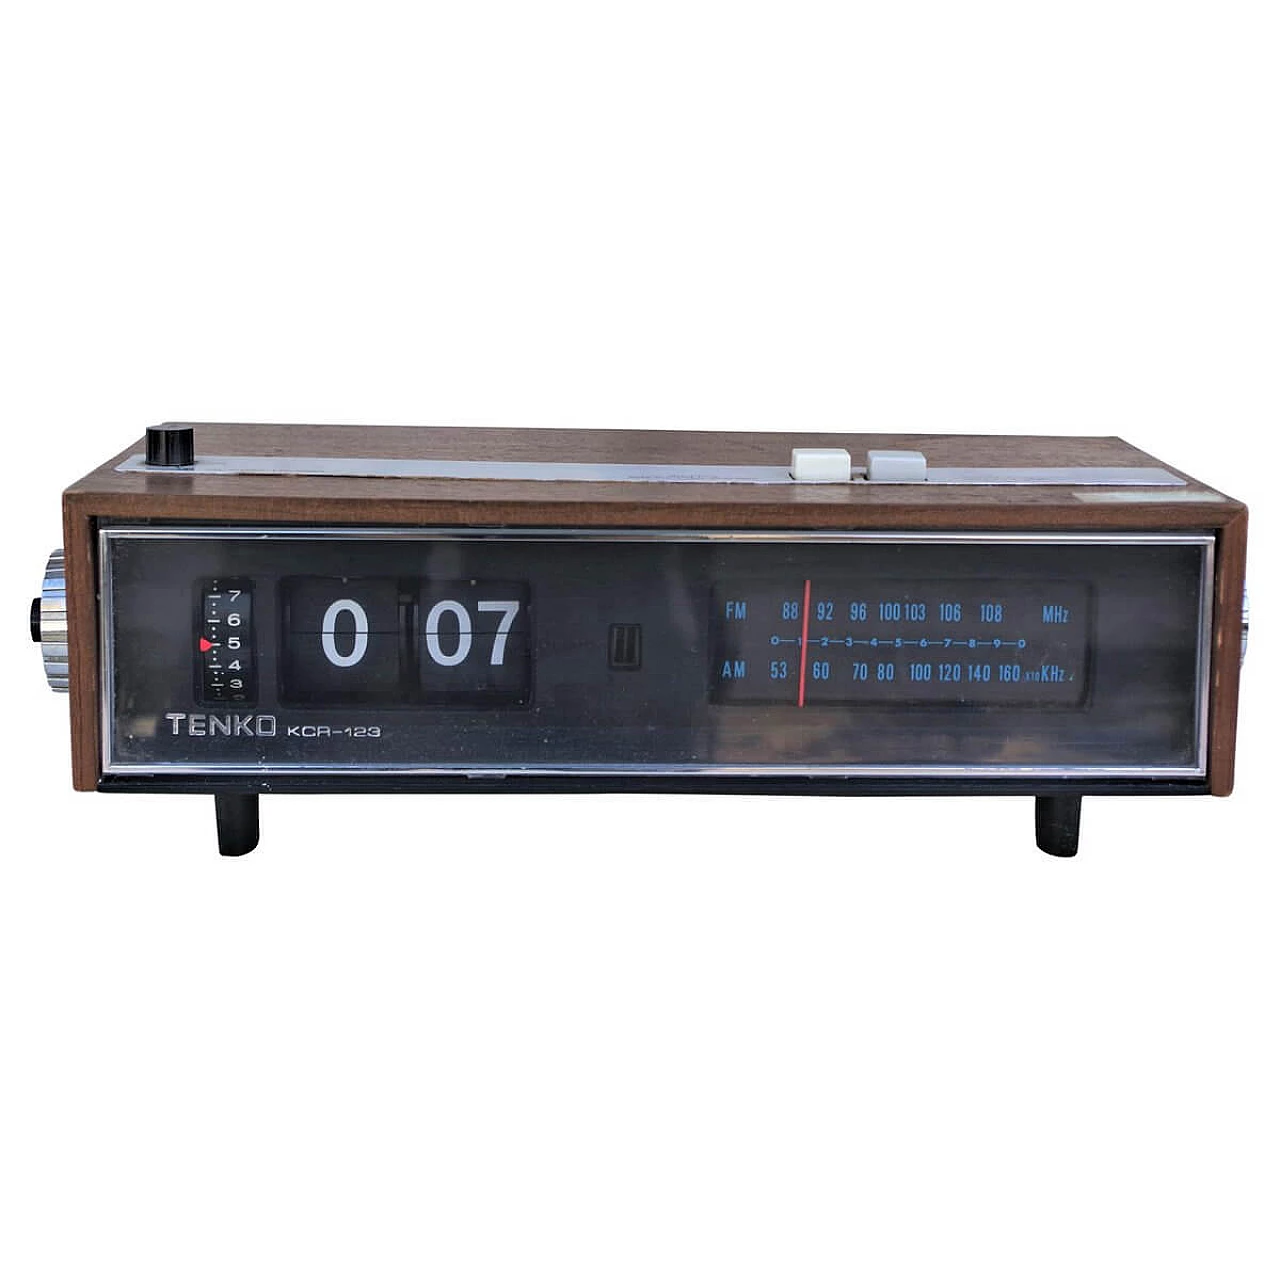 Radio alarm clock in plastic and wood by Tenko, 70s 1386606